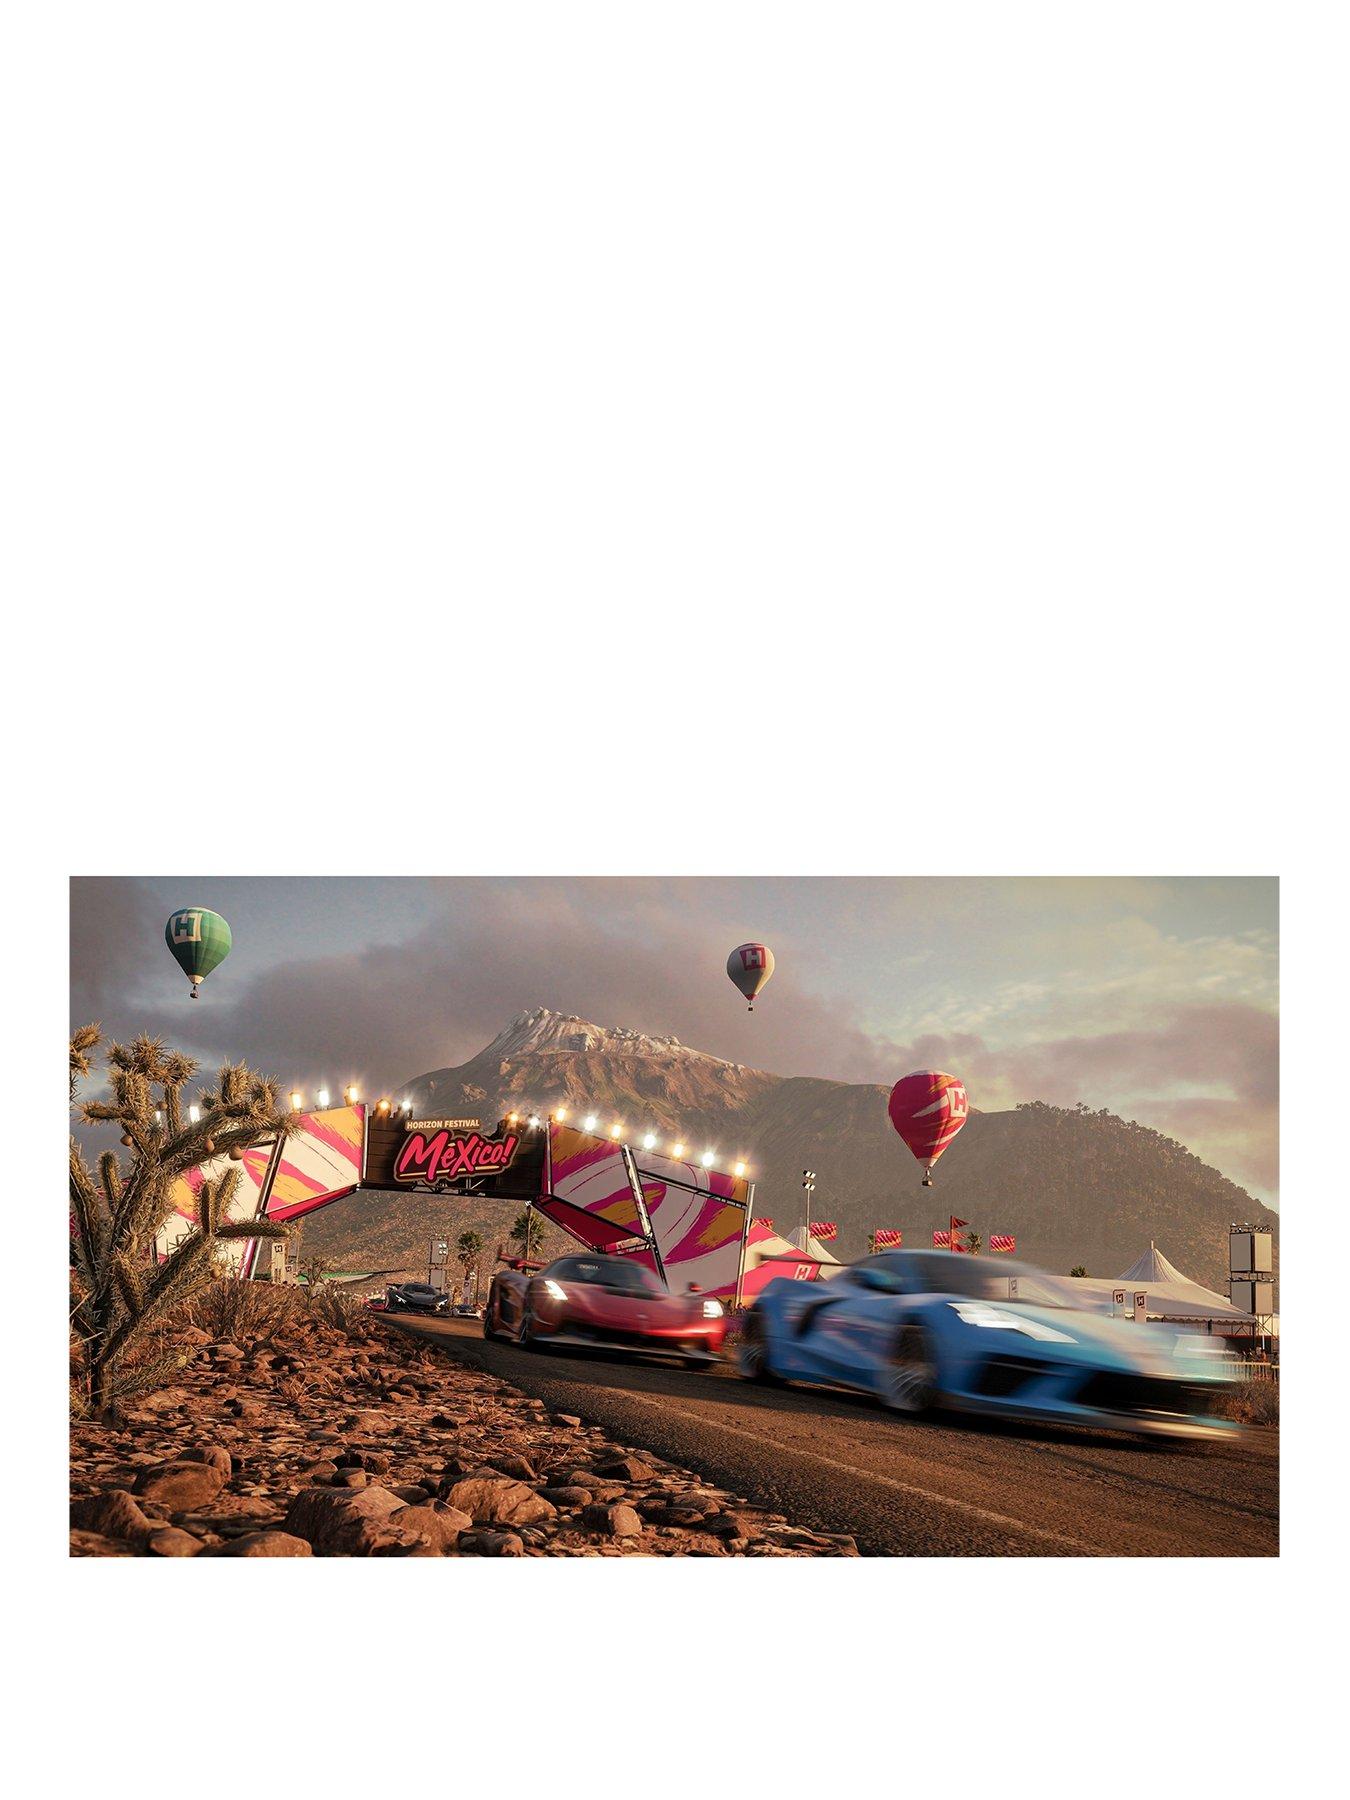 Forza Horizon 5 Standard Edition